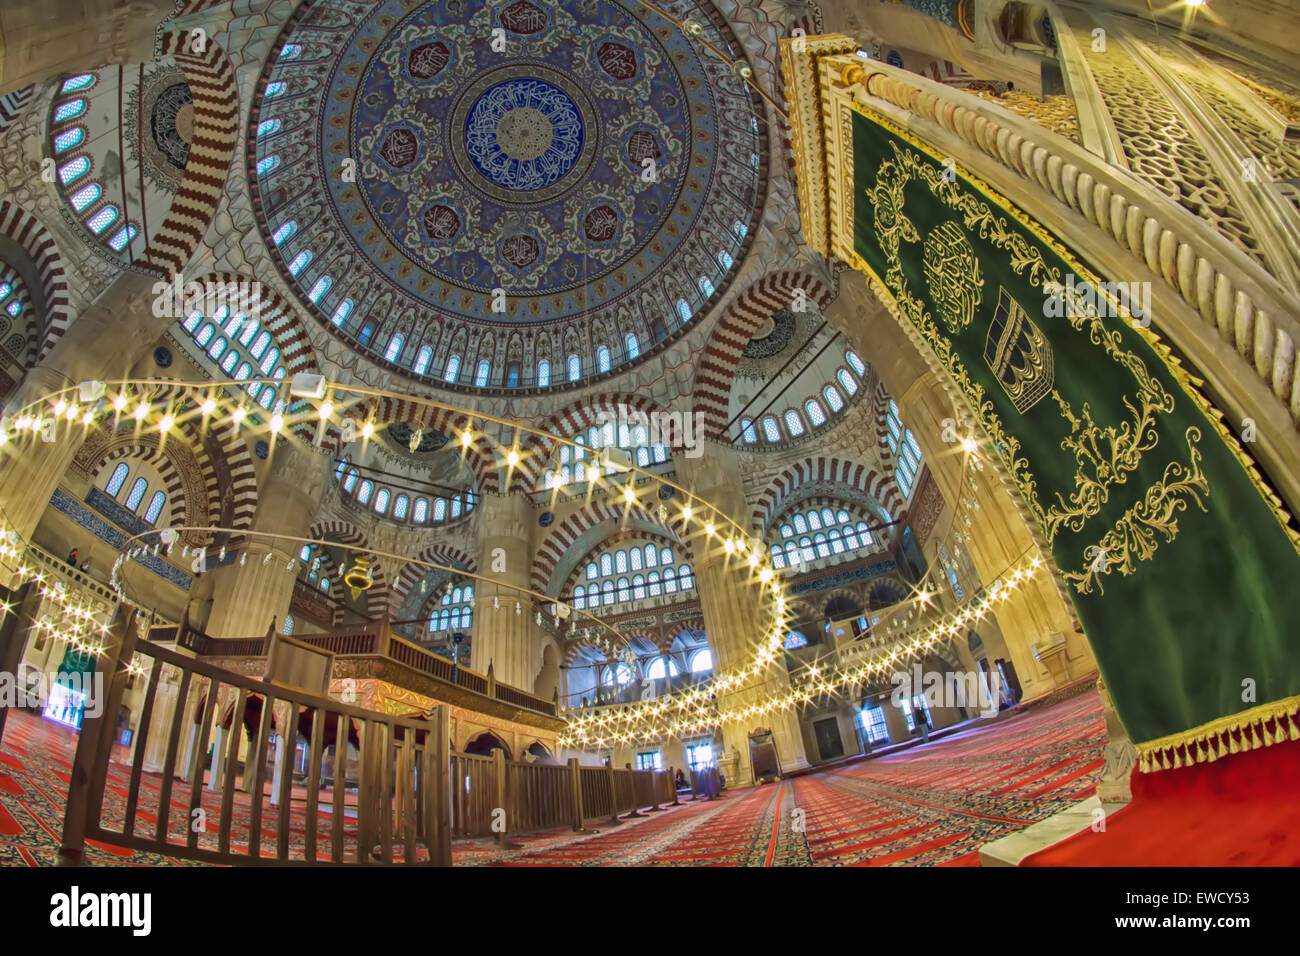 22.06.2015 Edirne / Turkey: Interior view from the Selimiye Mosque ...